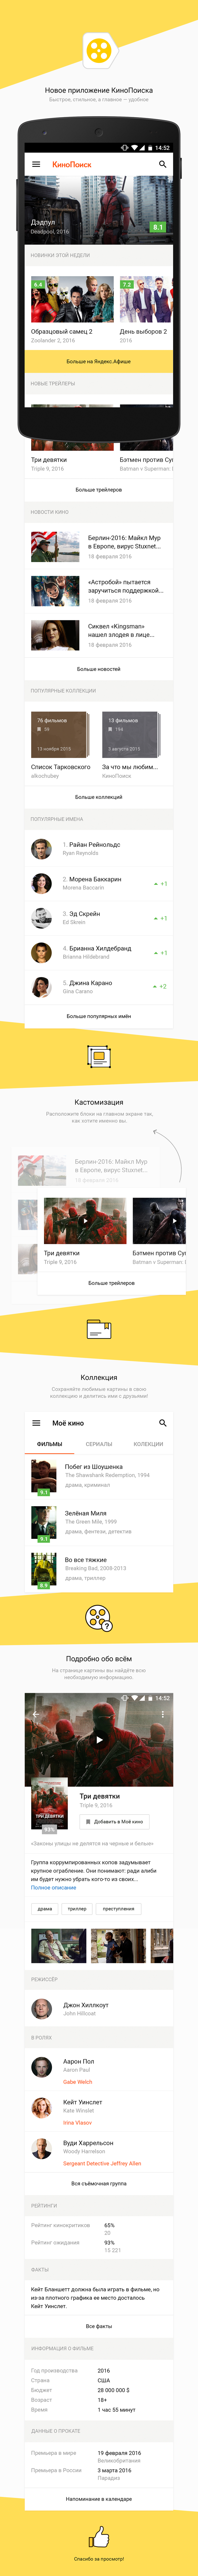 Web app material yandex google design kinopoisk movie films Theatre